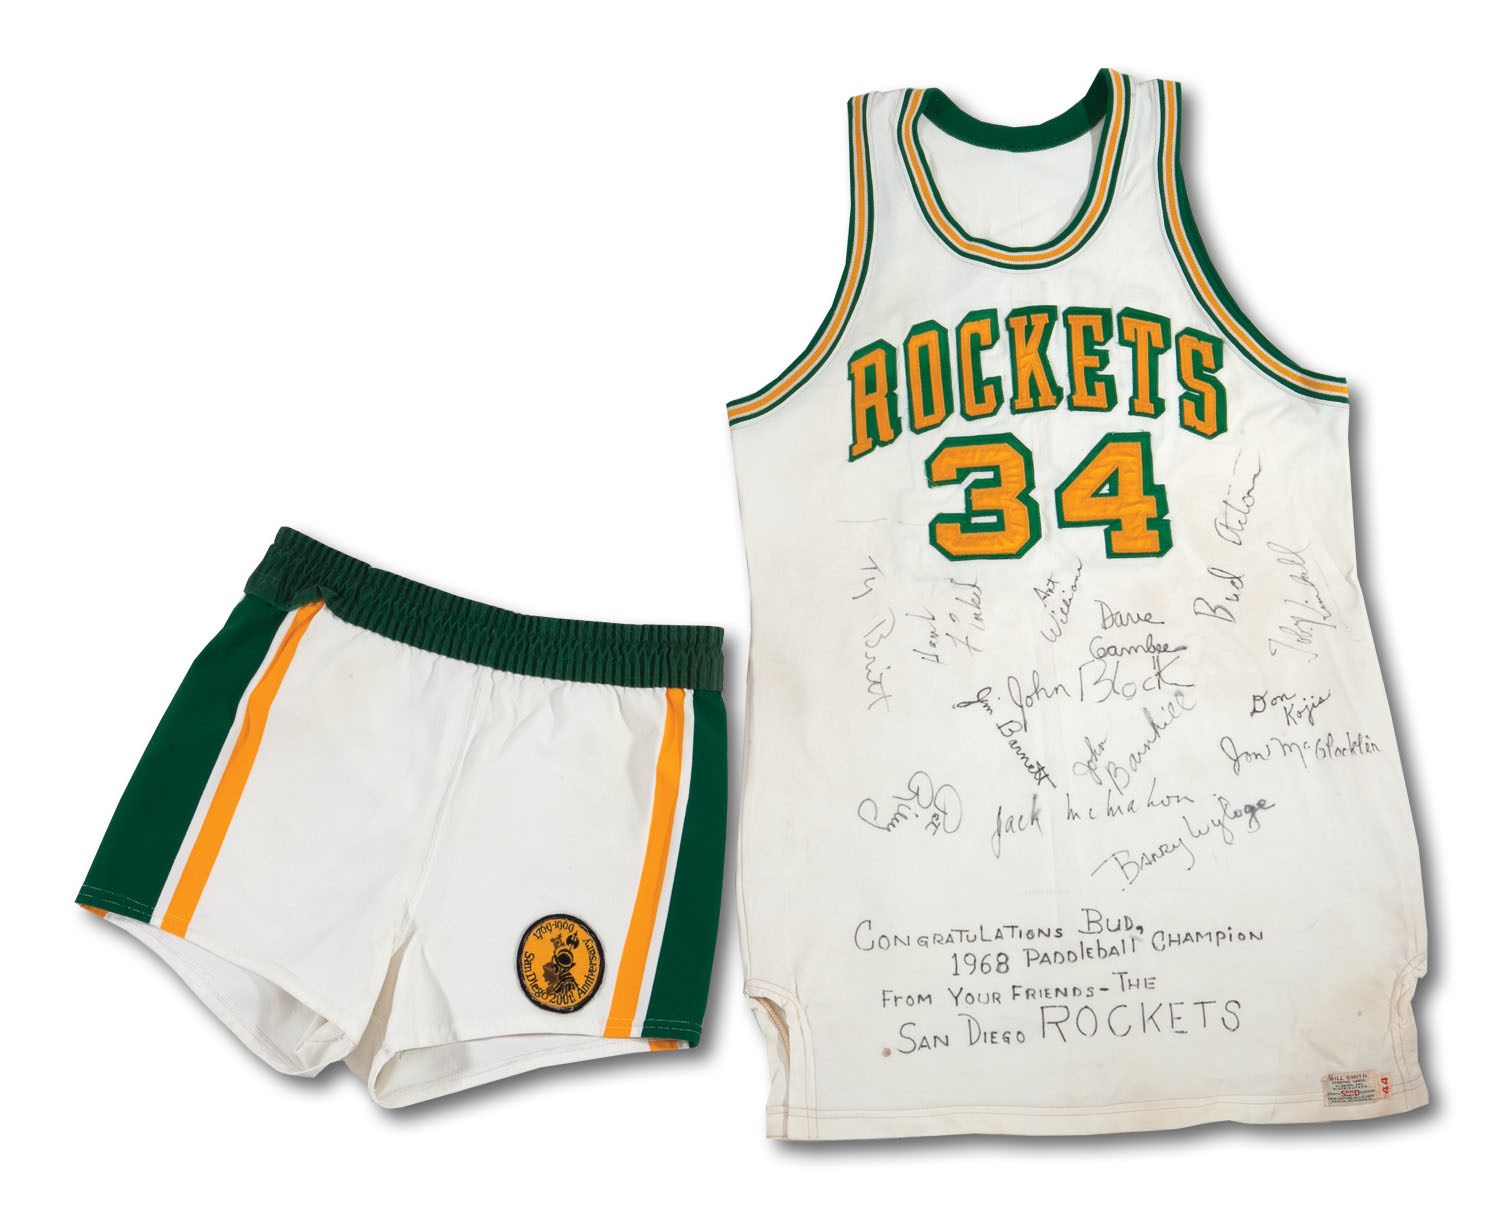 San Diego Rockets Basketball Original Vintage Sports Memorabilia for sale